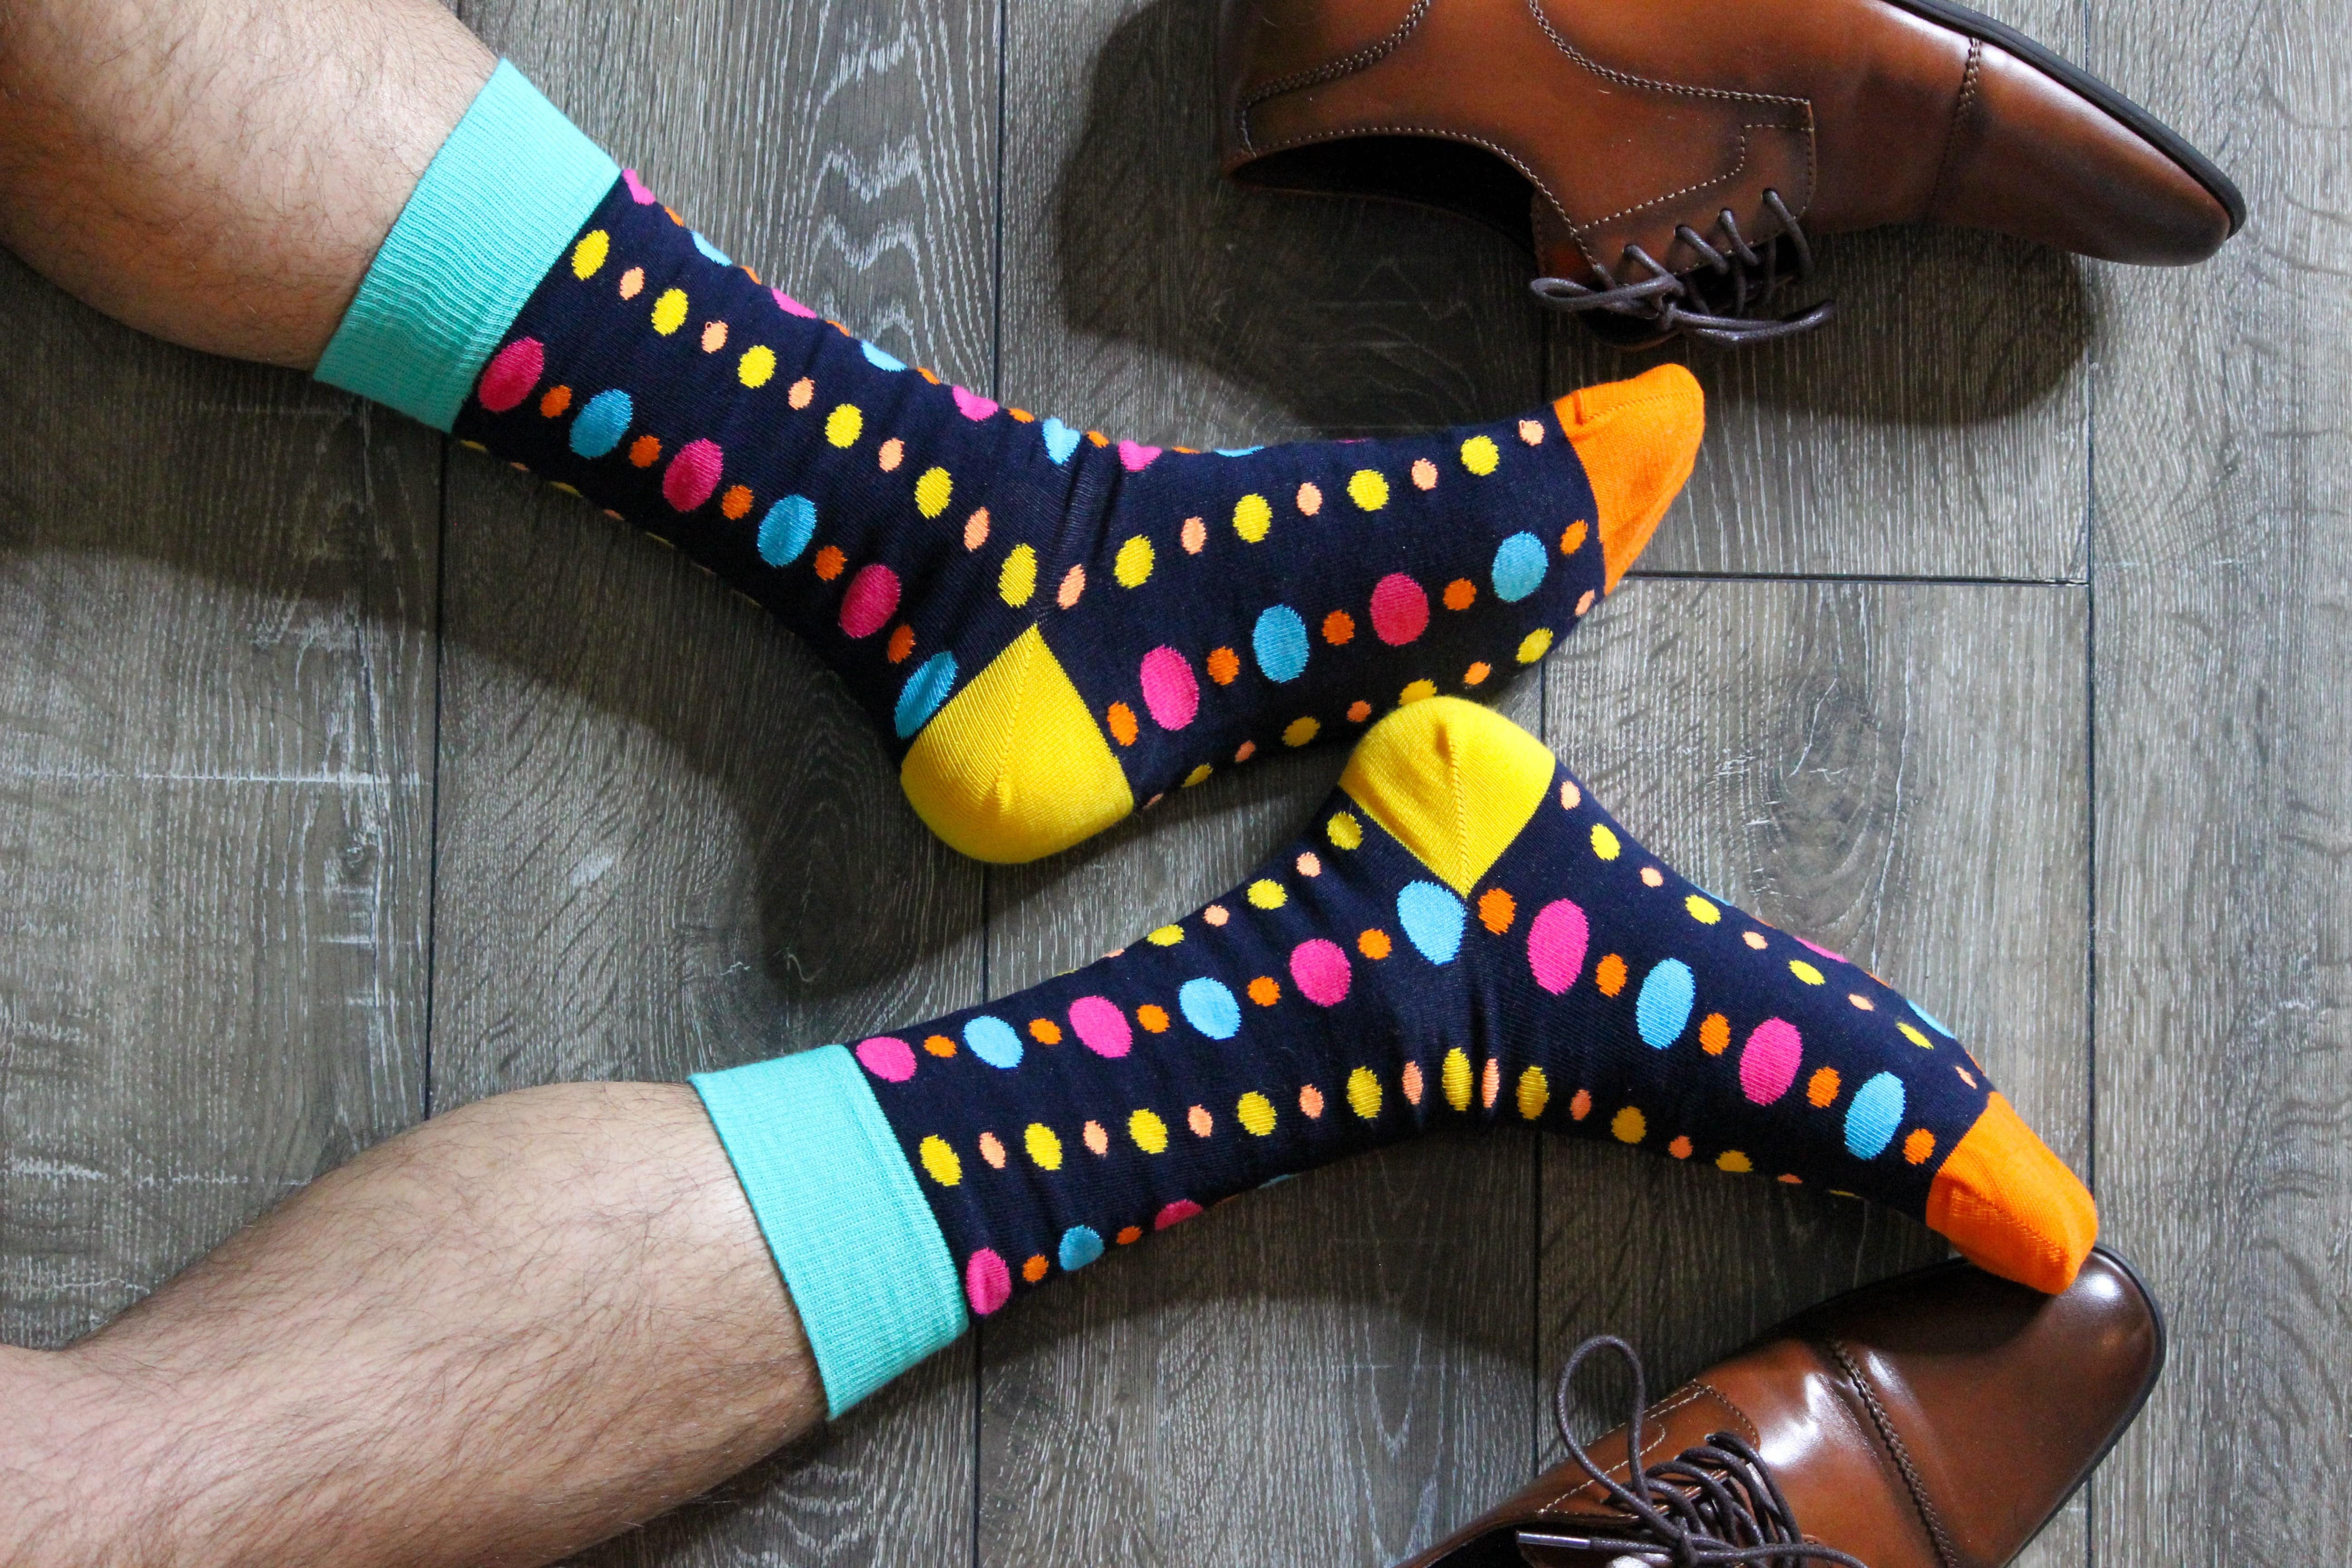 Polka Dot Pattern Colorful Crew Cotton Socks